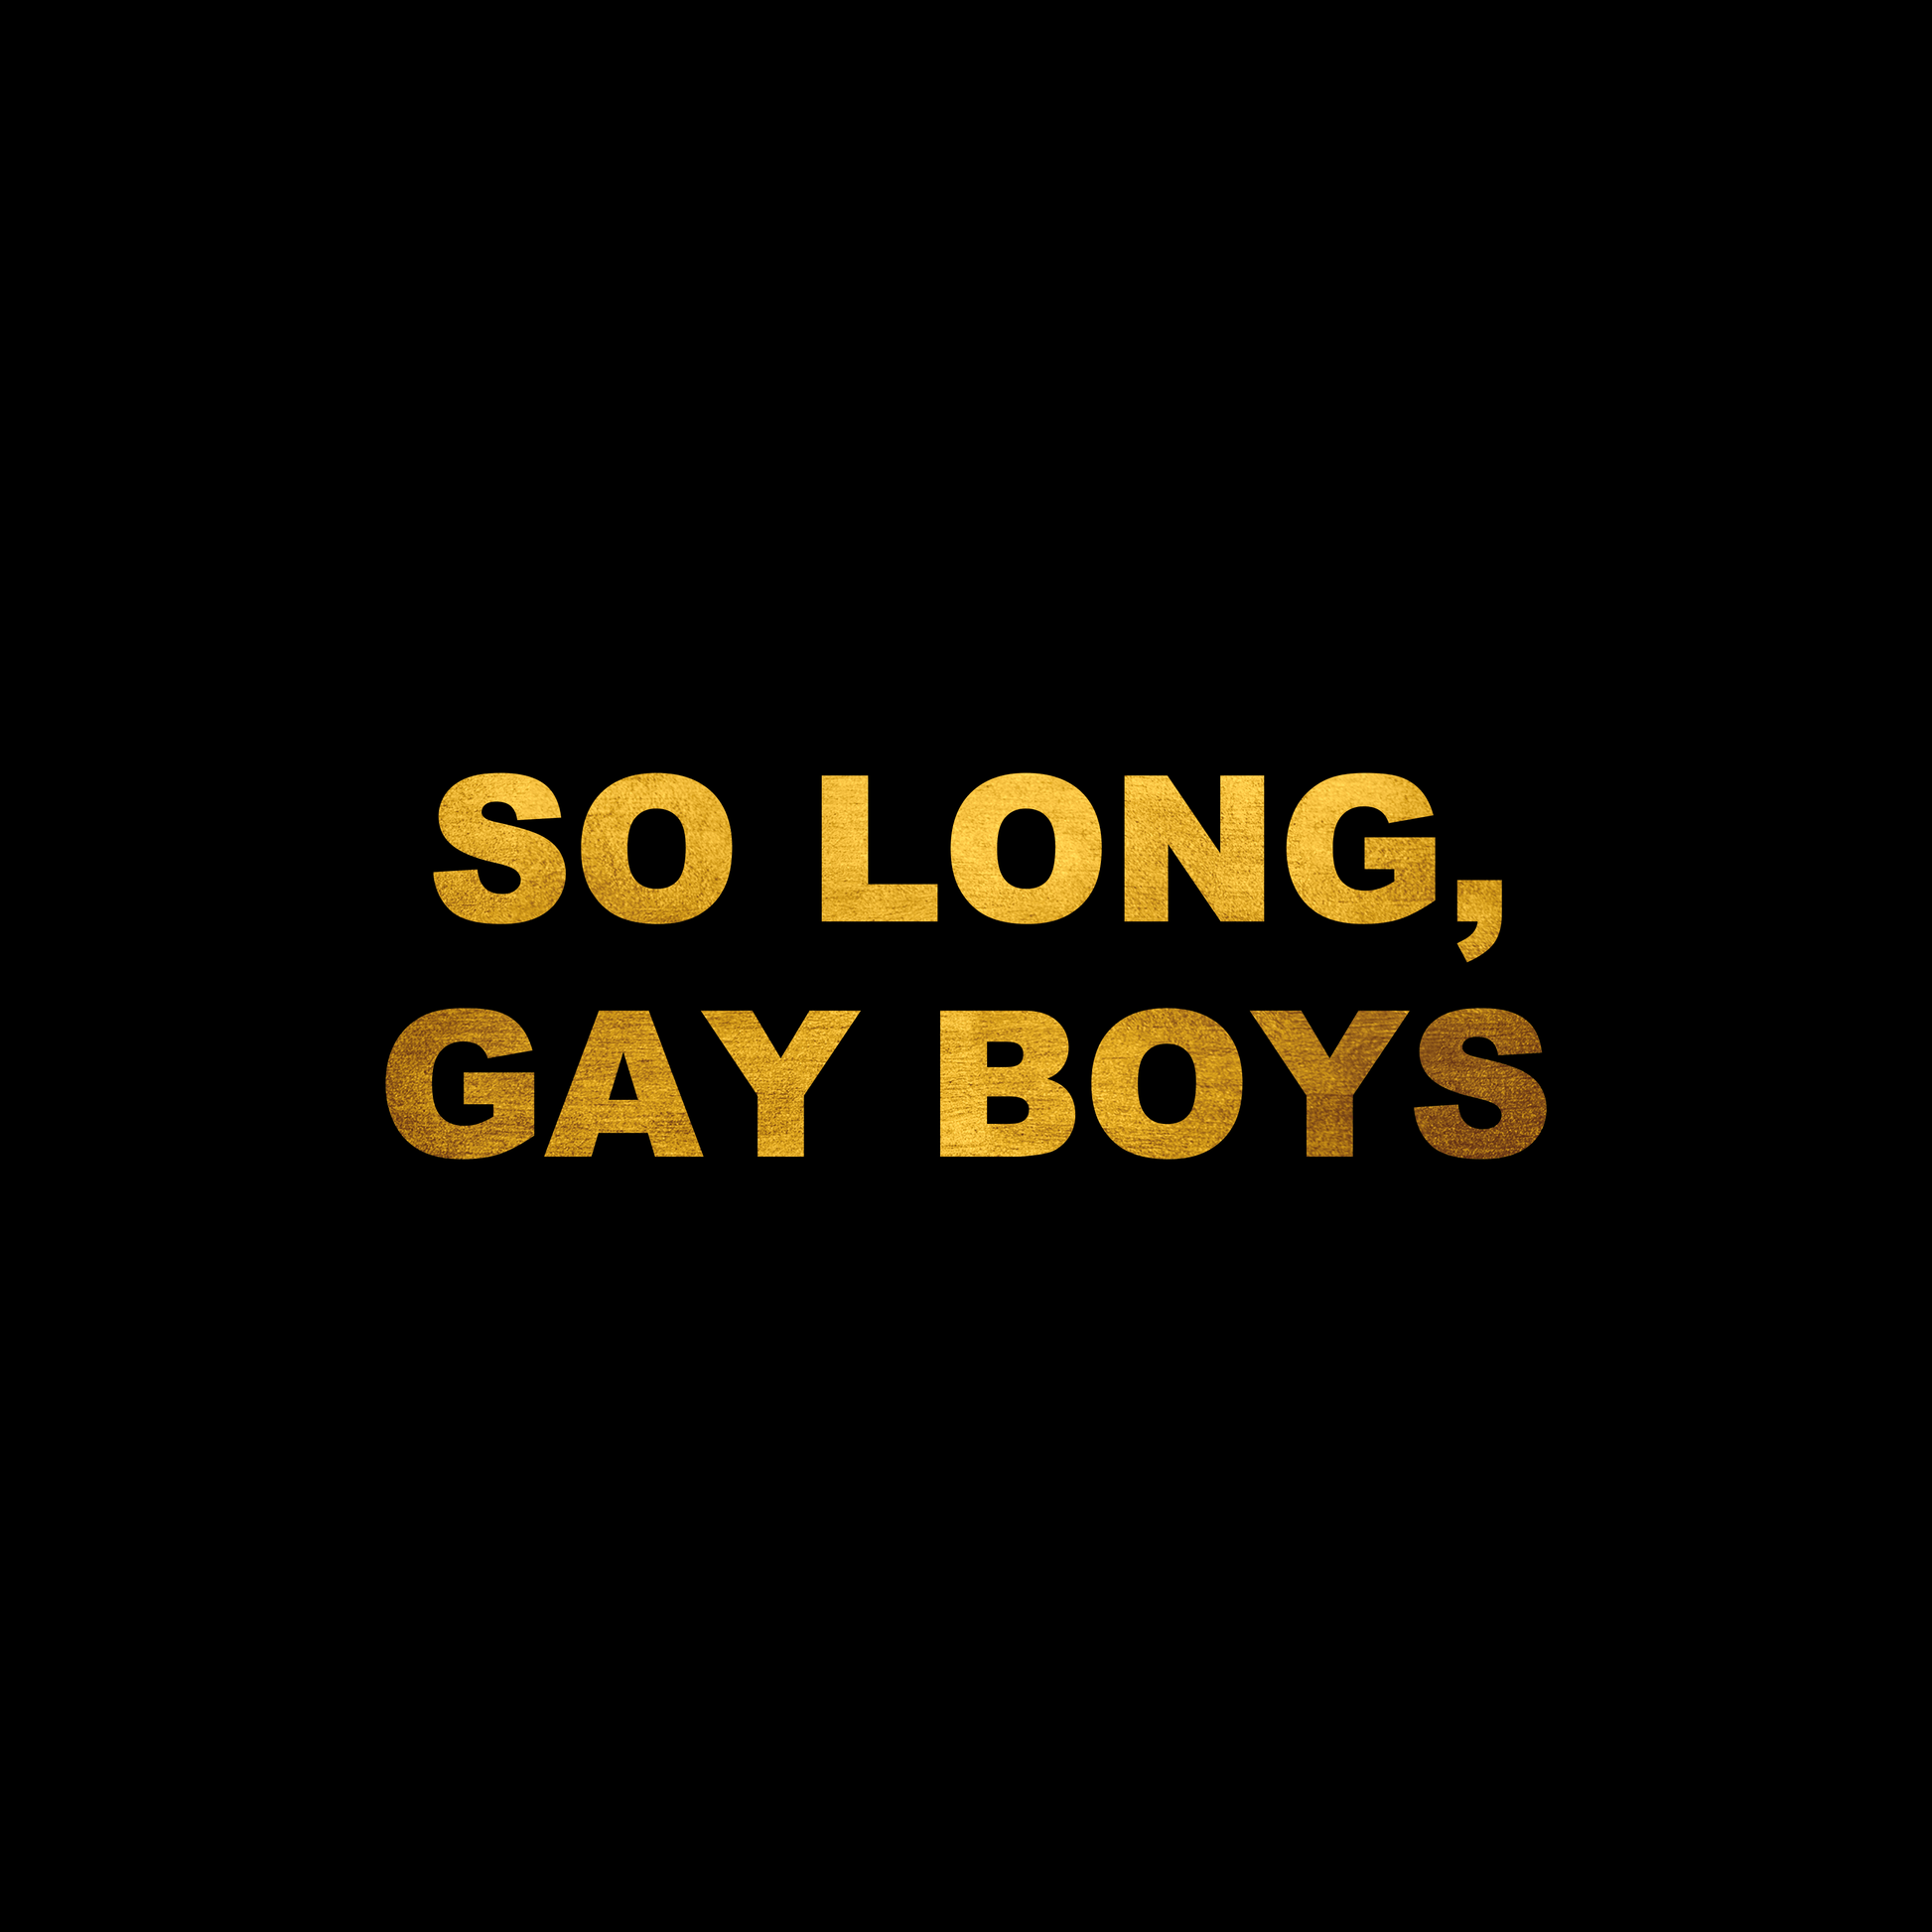 So long gay boys sticker decal